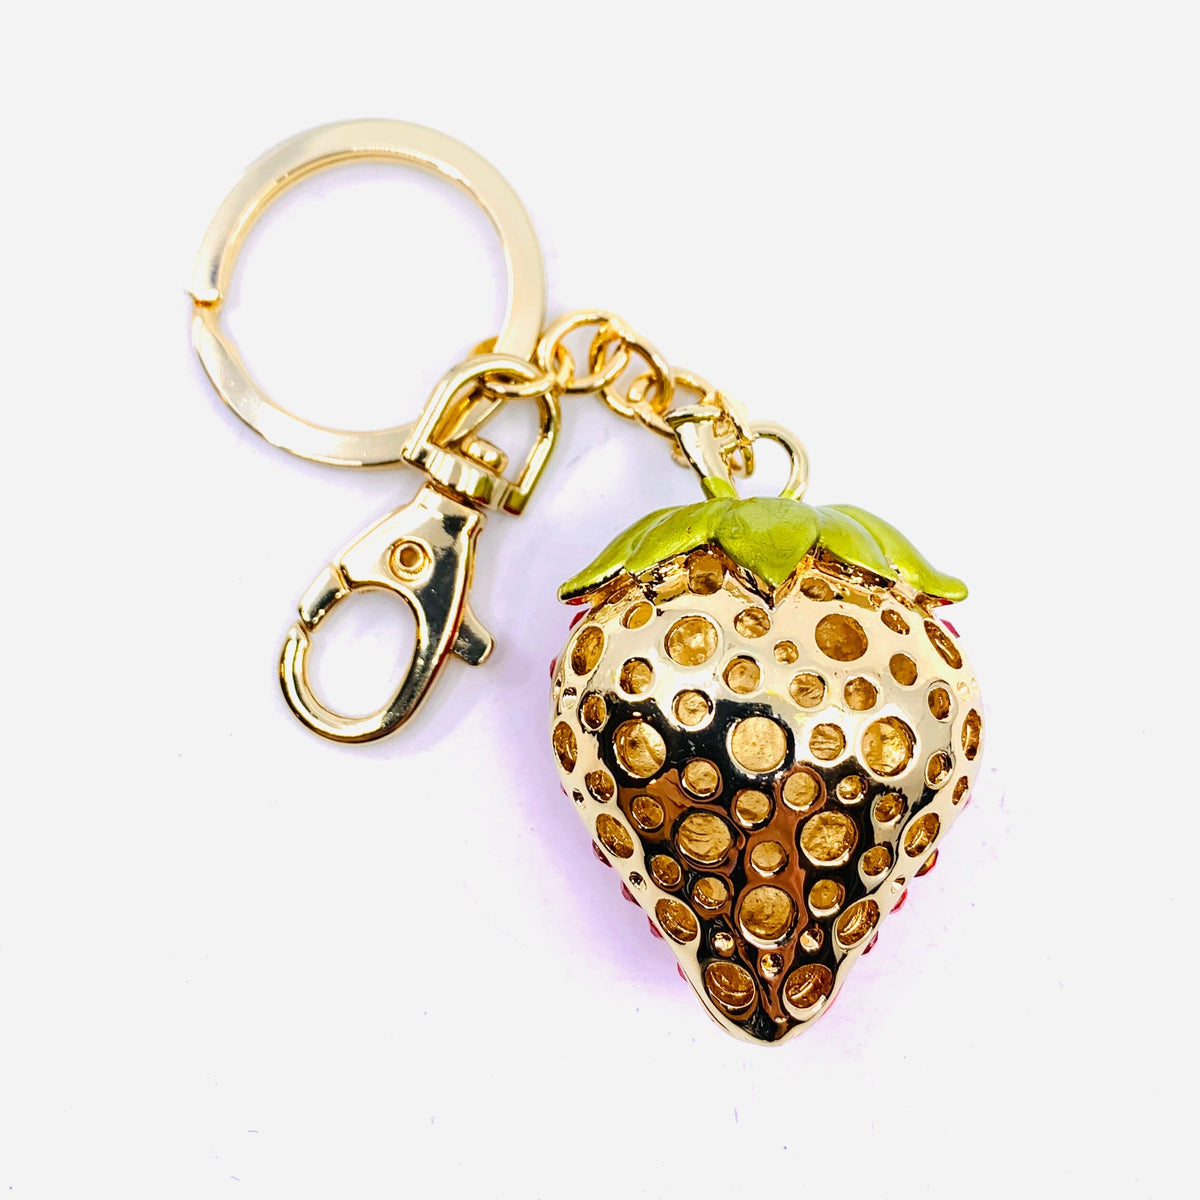 Bejeweled Key Chain 3, Strawberry Accessory Kubla Craft 